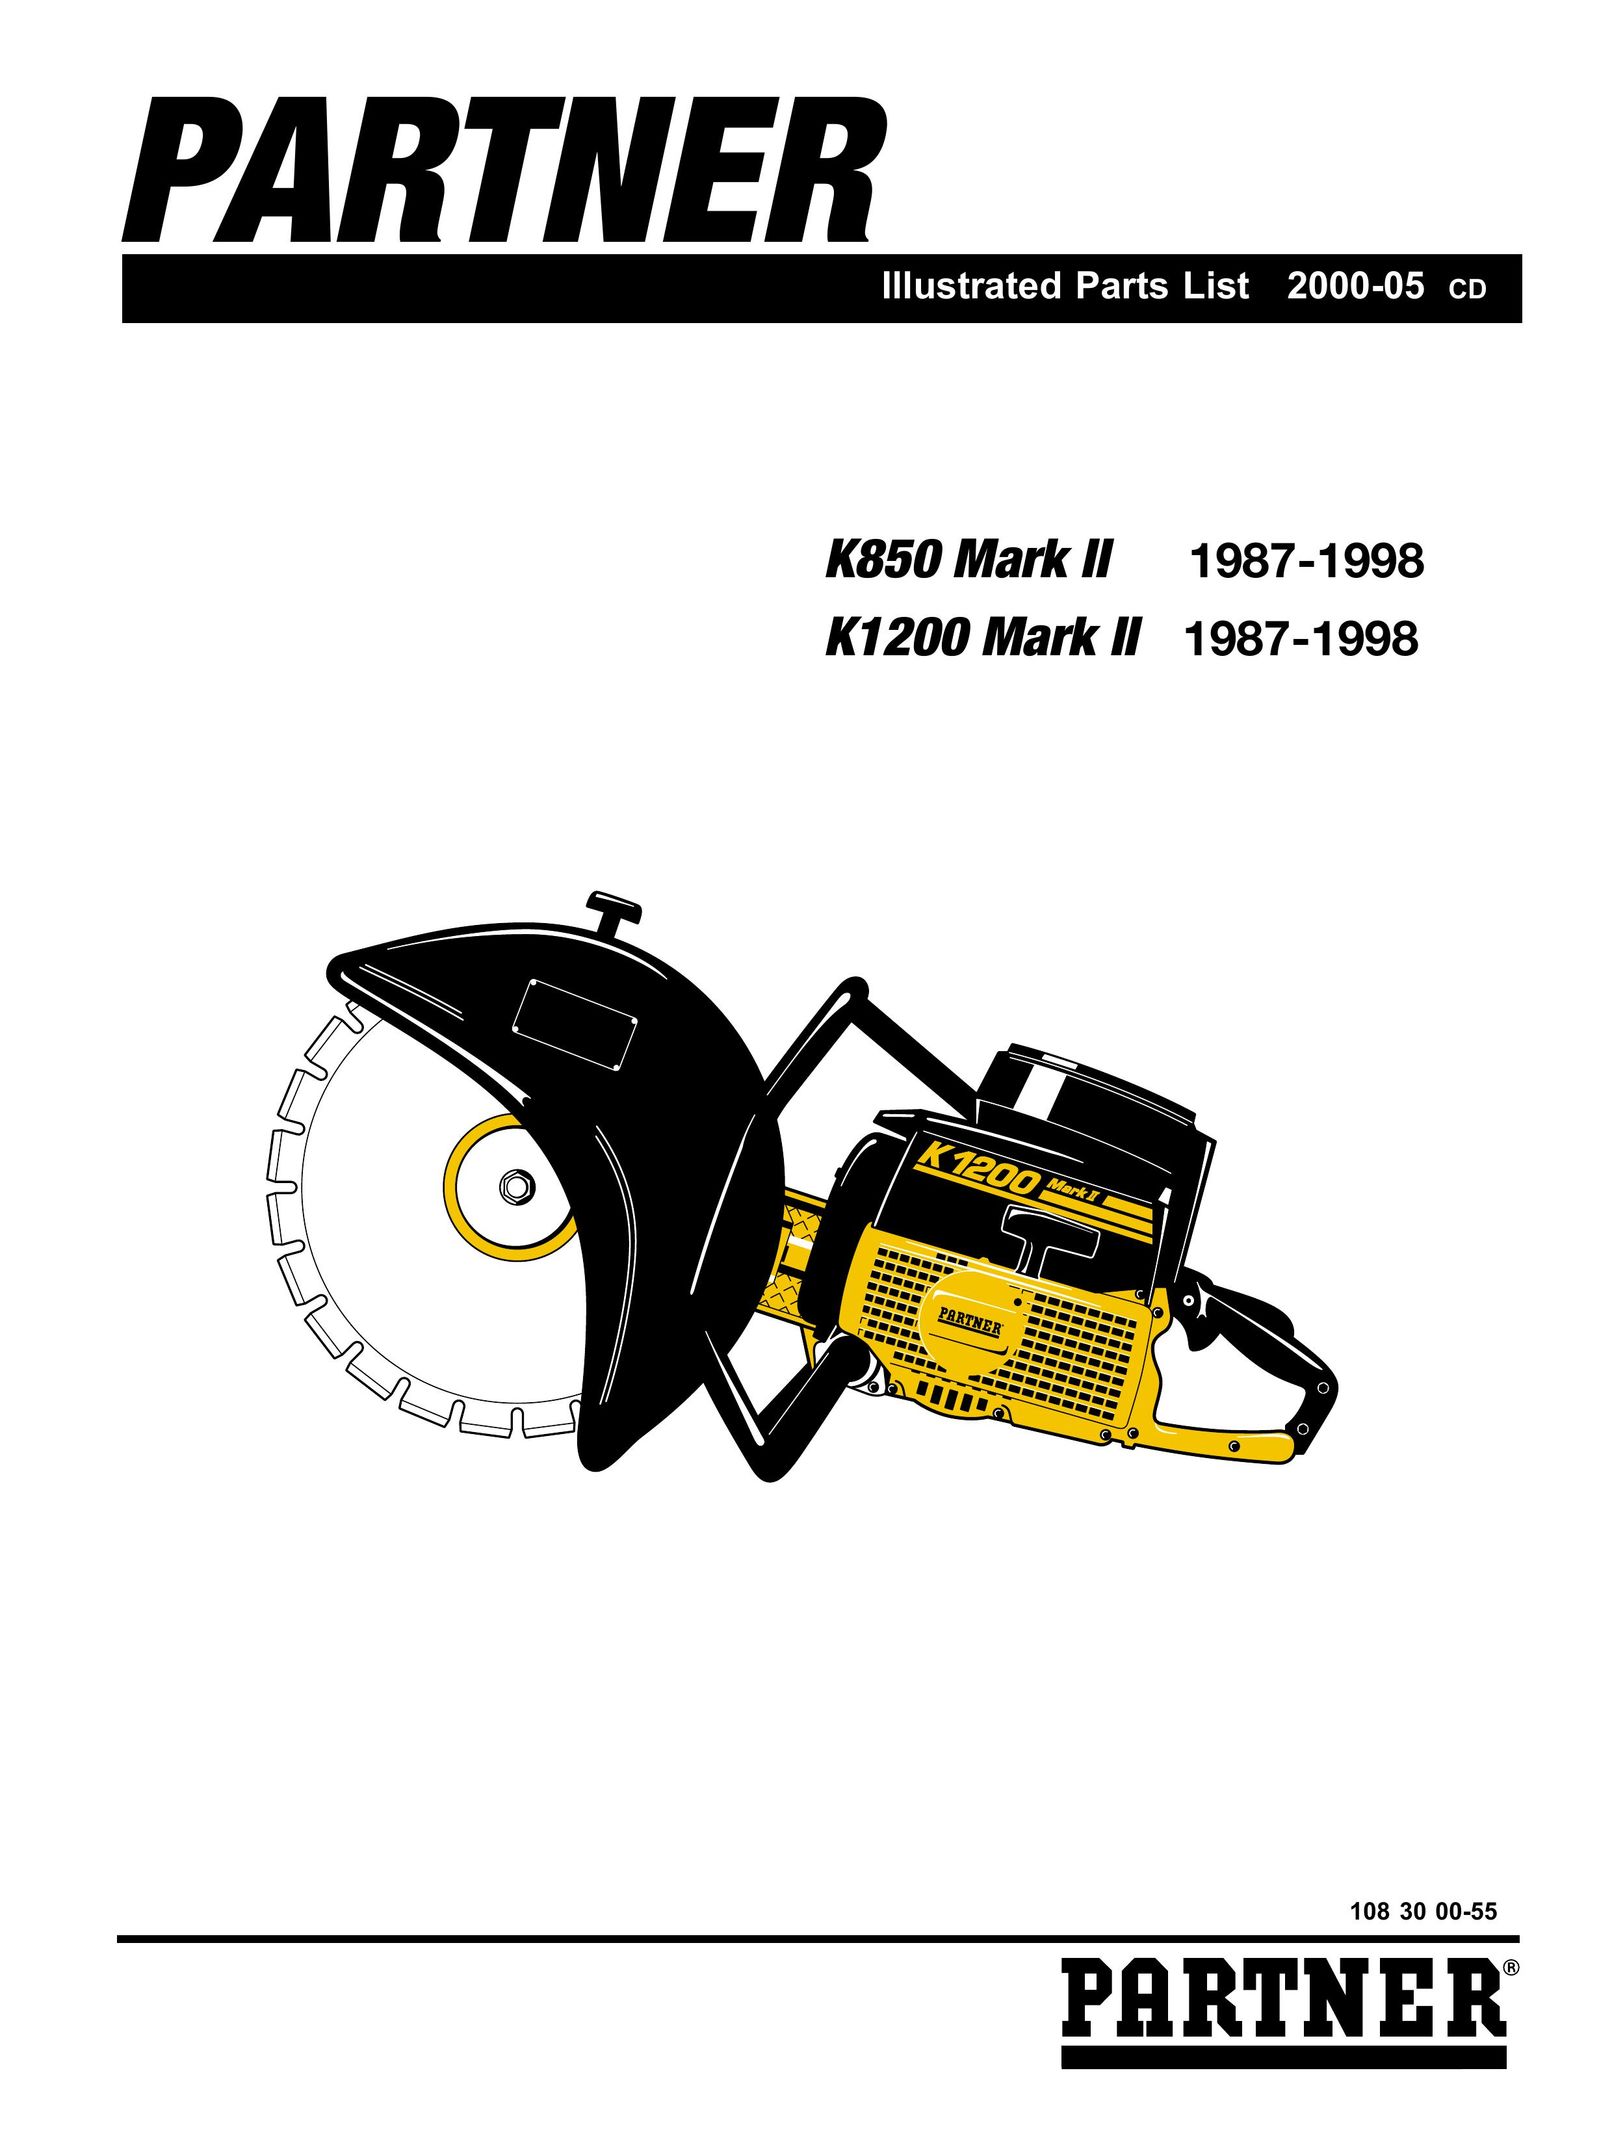 Partner Tech K850 Saw User Manual